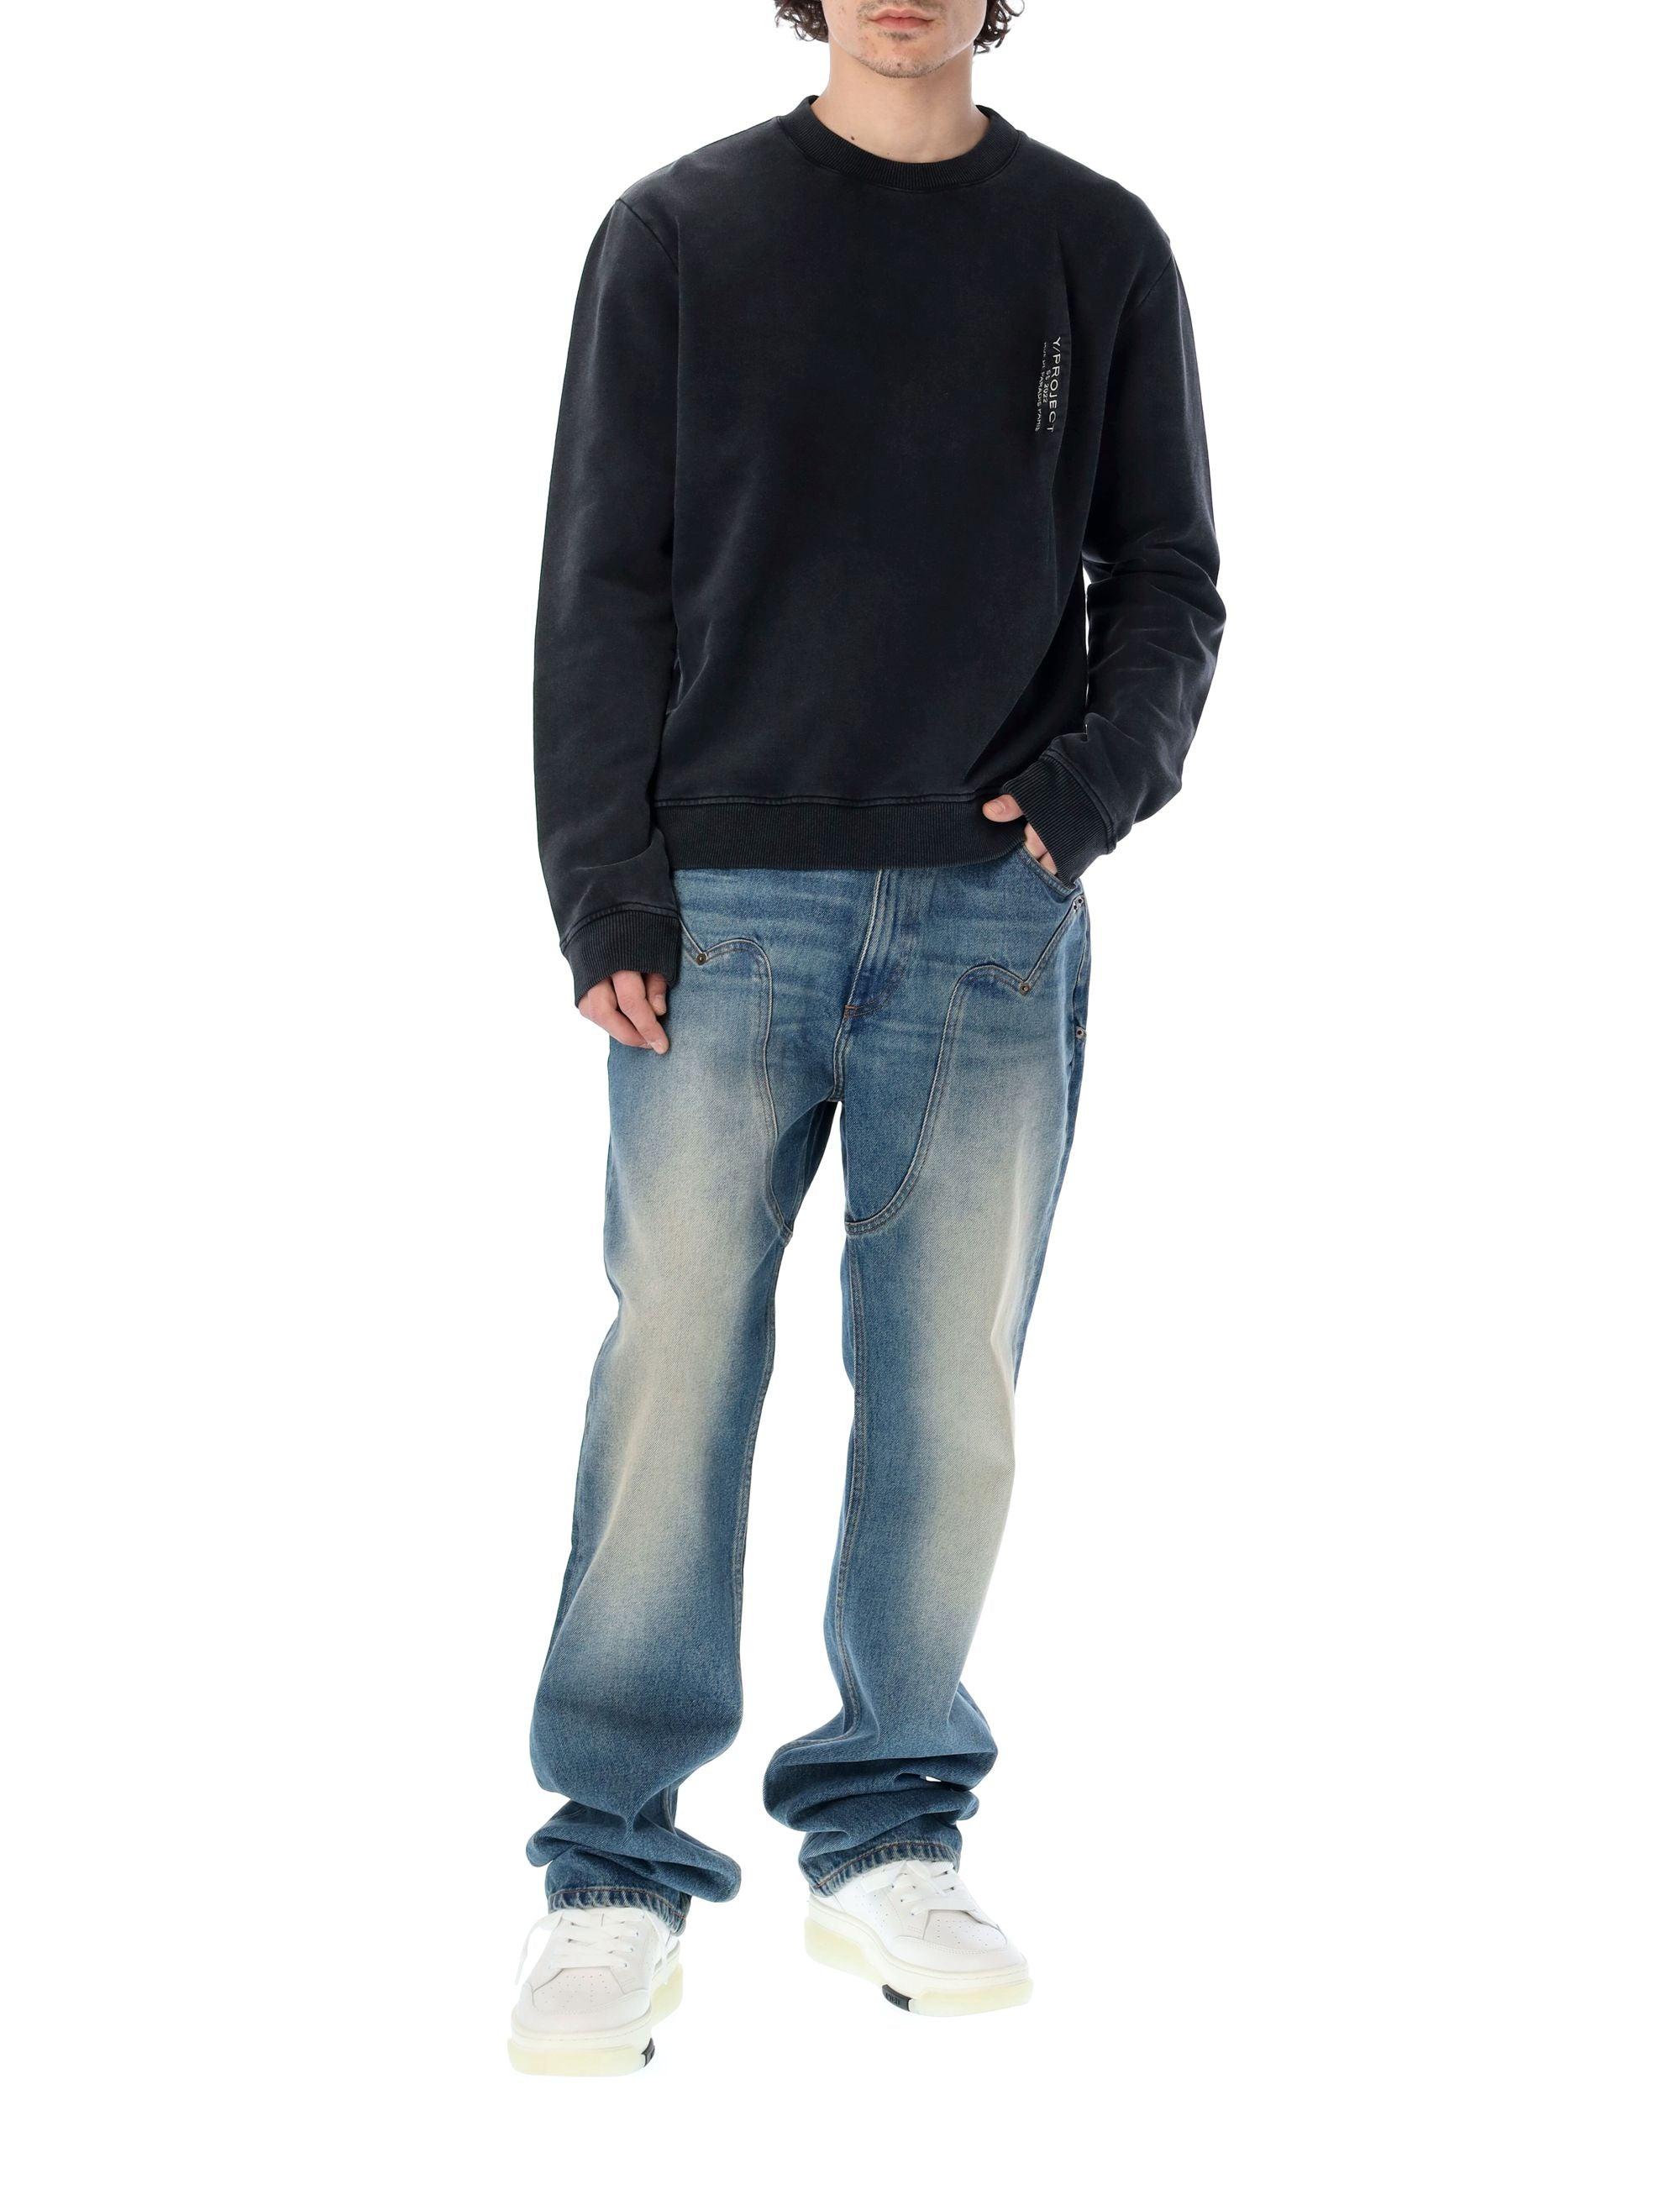 Y. Project Pinched Logo Sweatshirt in Black for Men | Lyst